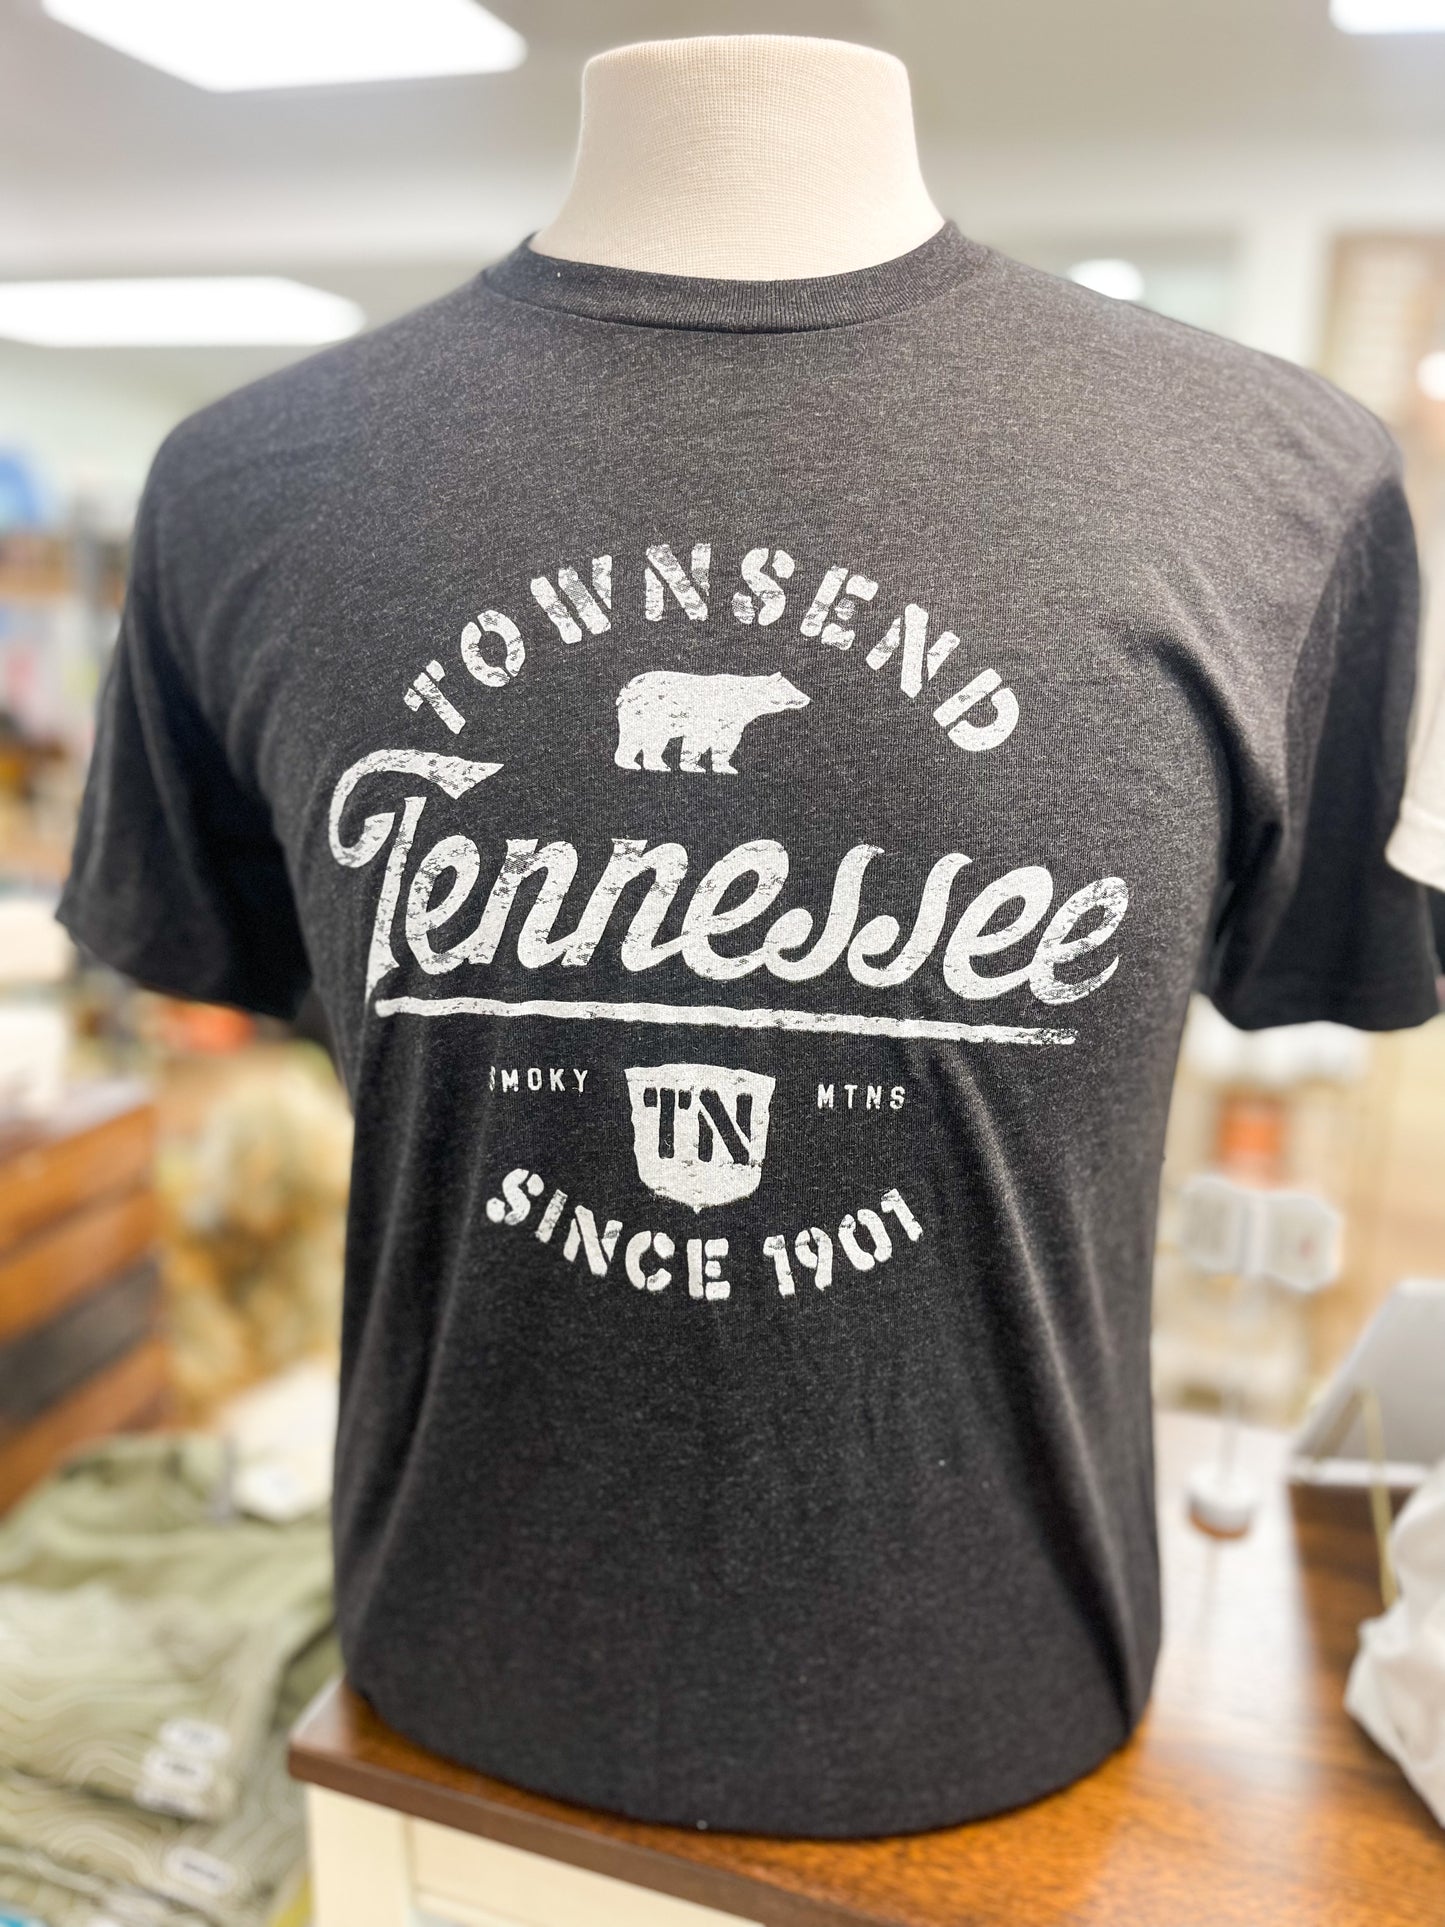 Townsend Tennessee t-shirt